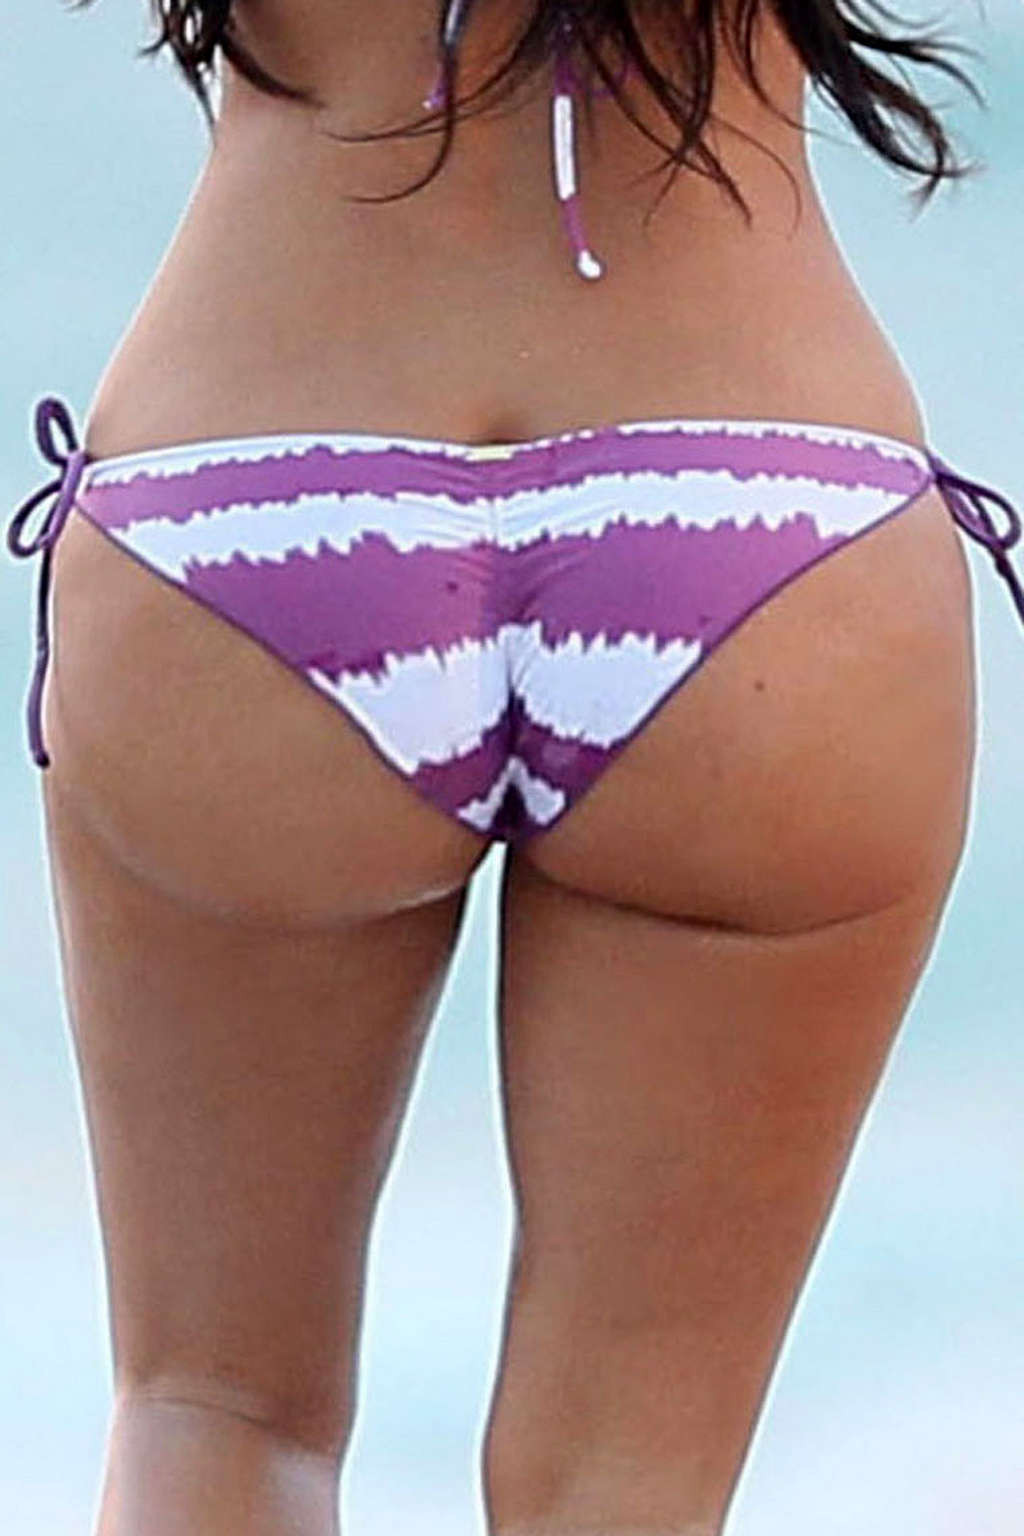 Kim kardashian montrant son corps sexy et son cul sexy sur des photos paparazzi
 #75339019